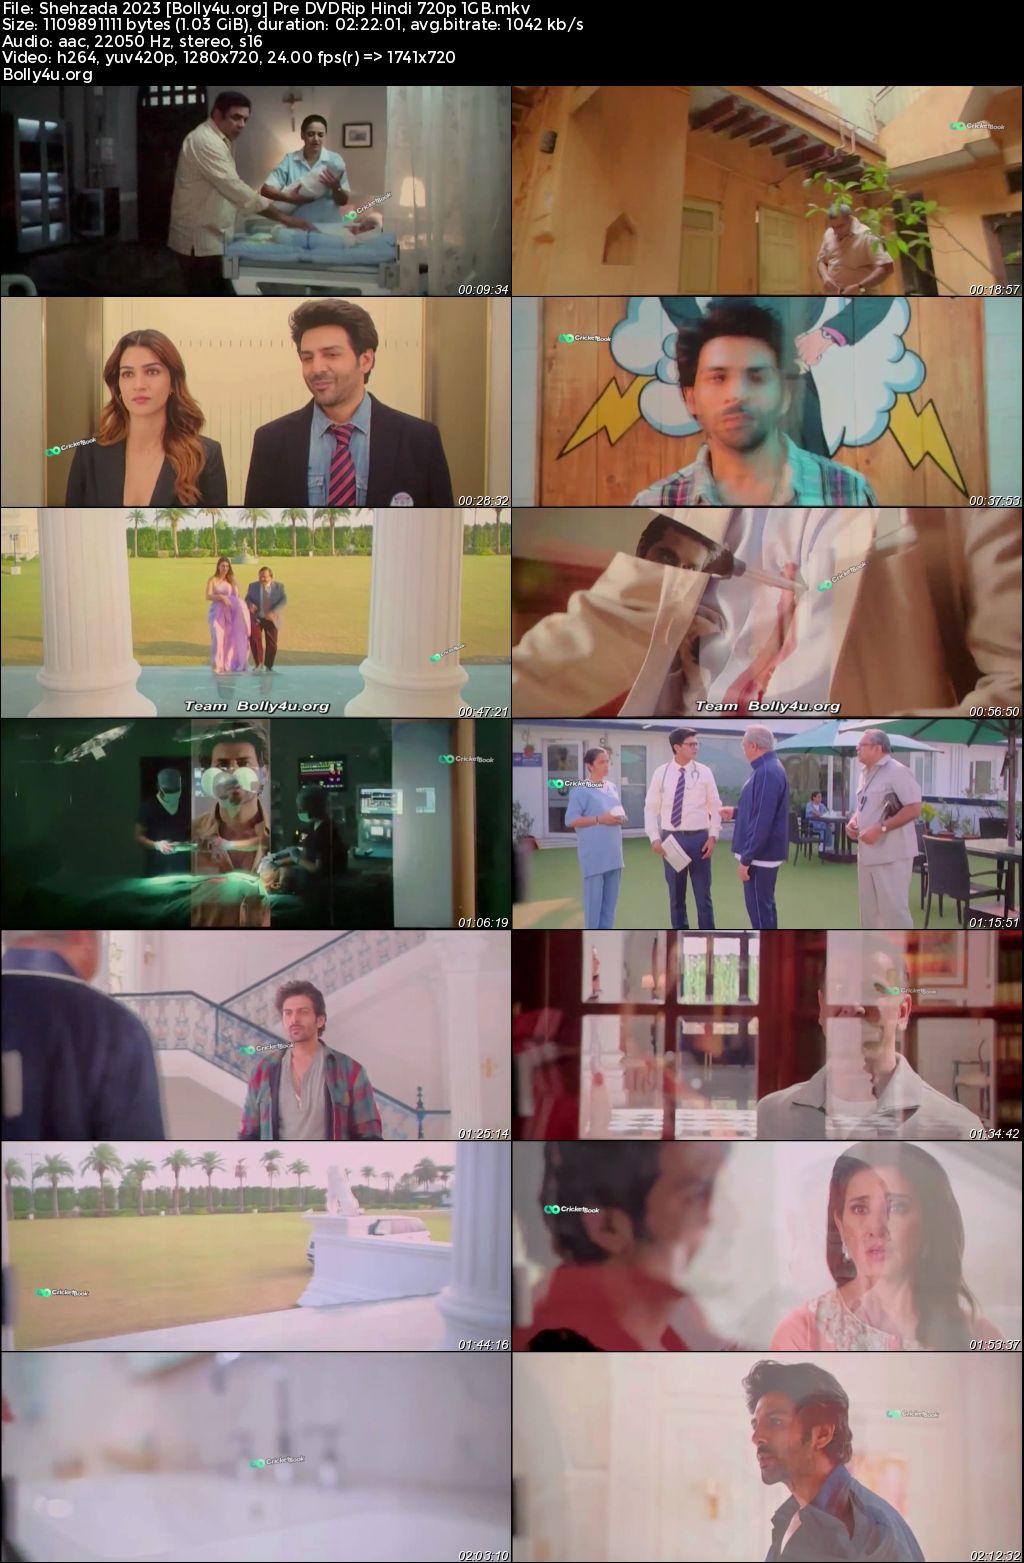 Shehzada 2023 Pre DVDRip Hindi Full Movie Download 1080p 720p 480p